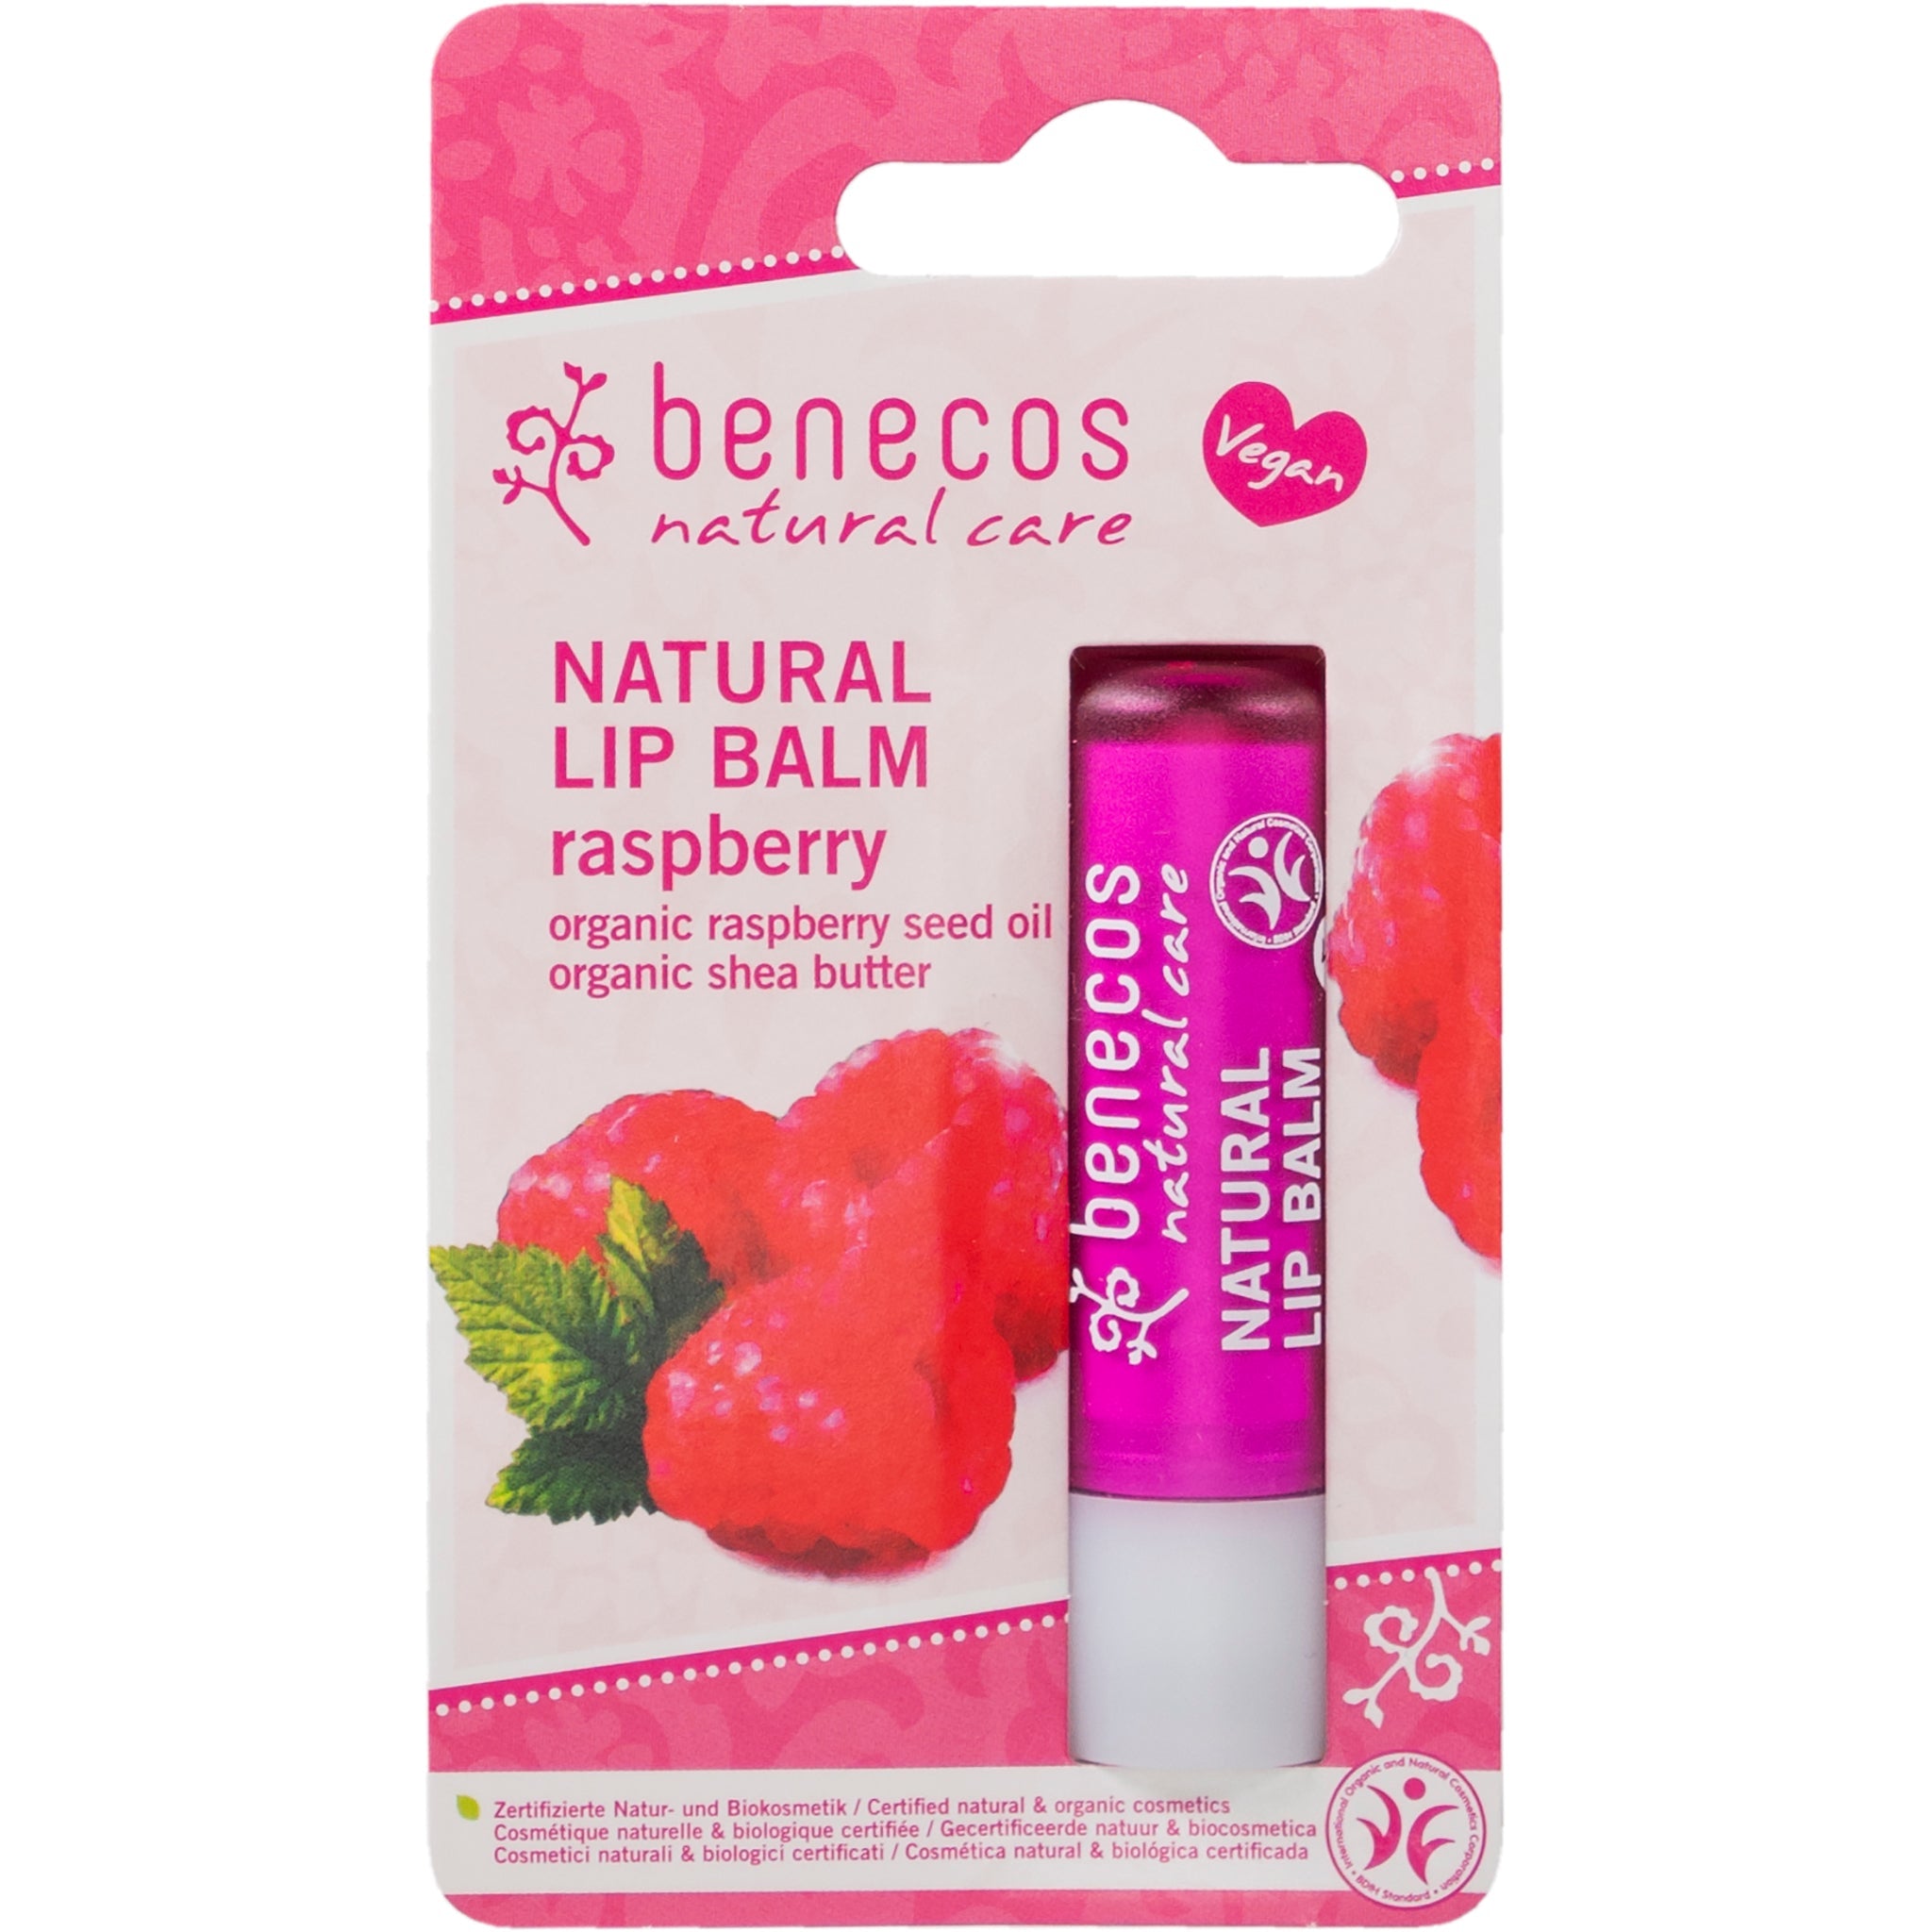 Natural Lip Balm - Raspberry - mypure.co.uk